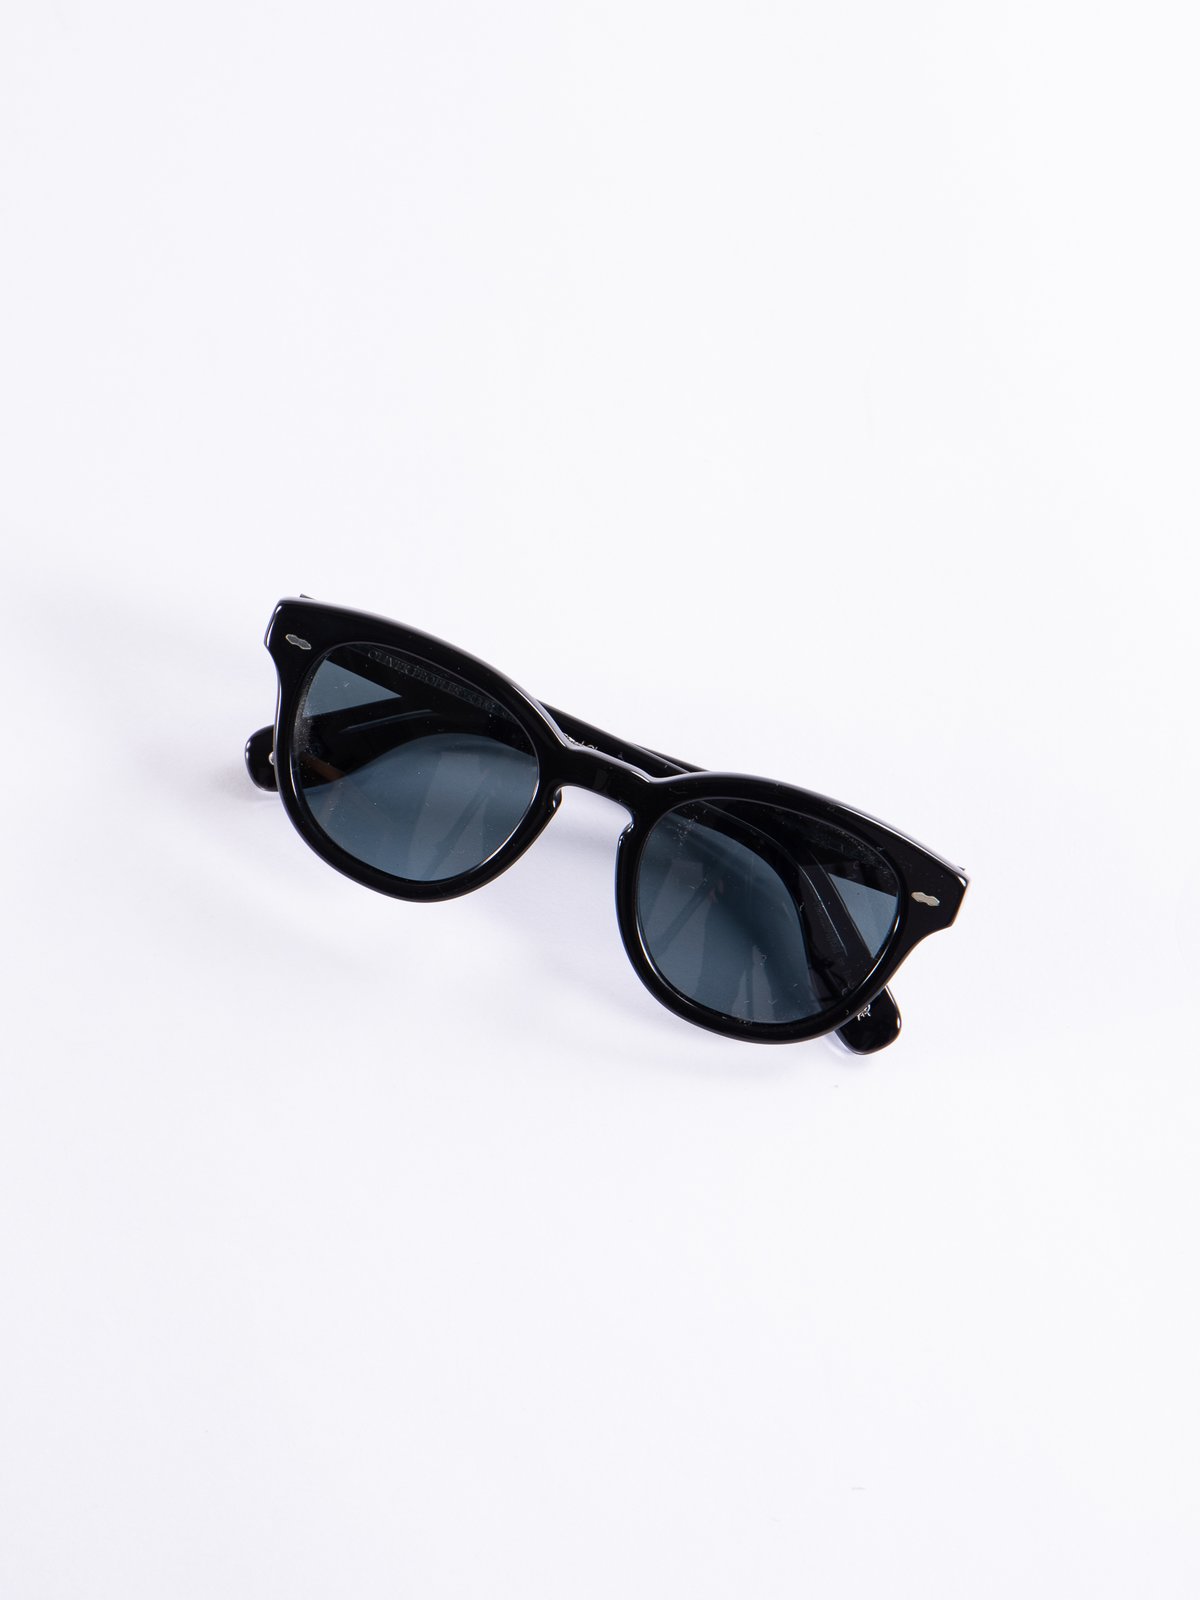 Black/Blue Polar Cary Grant Sunglasses - Image 1